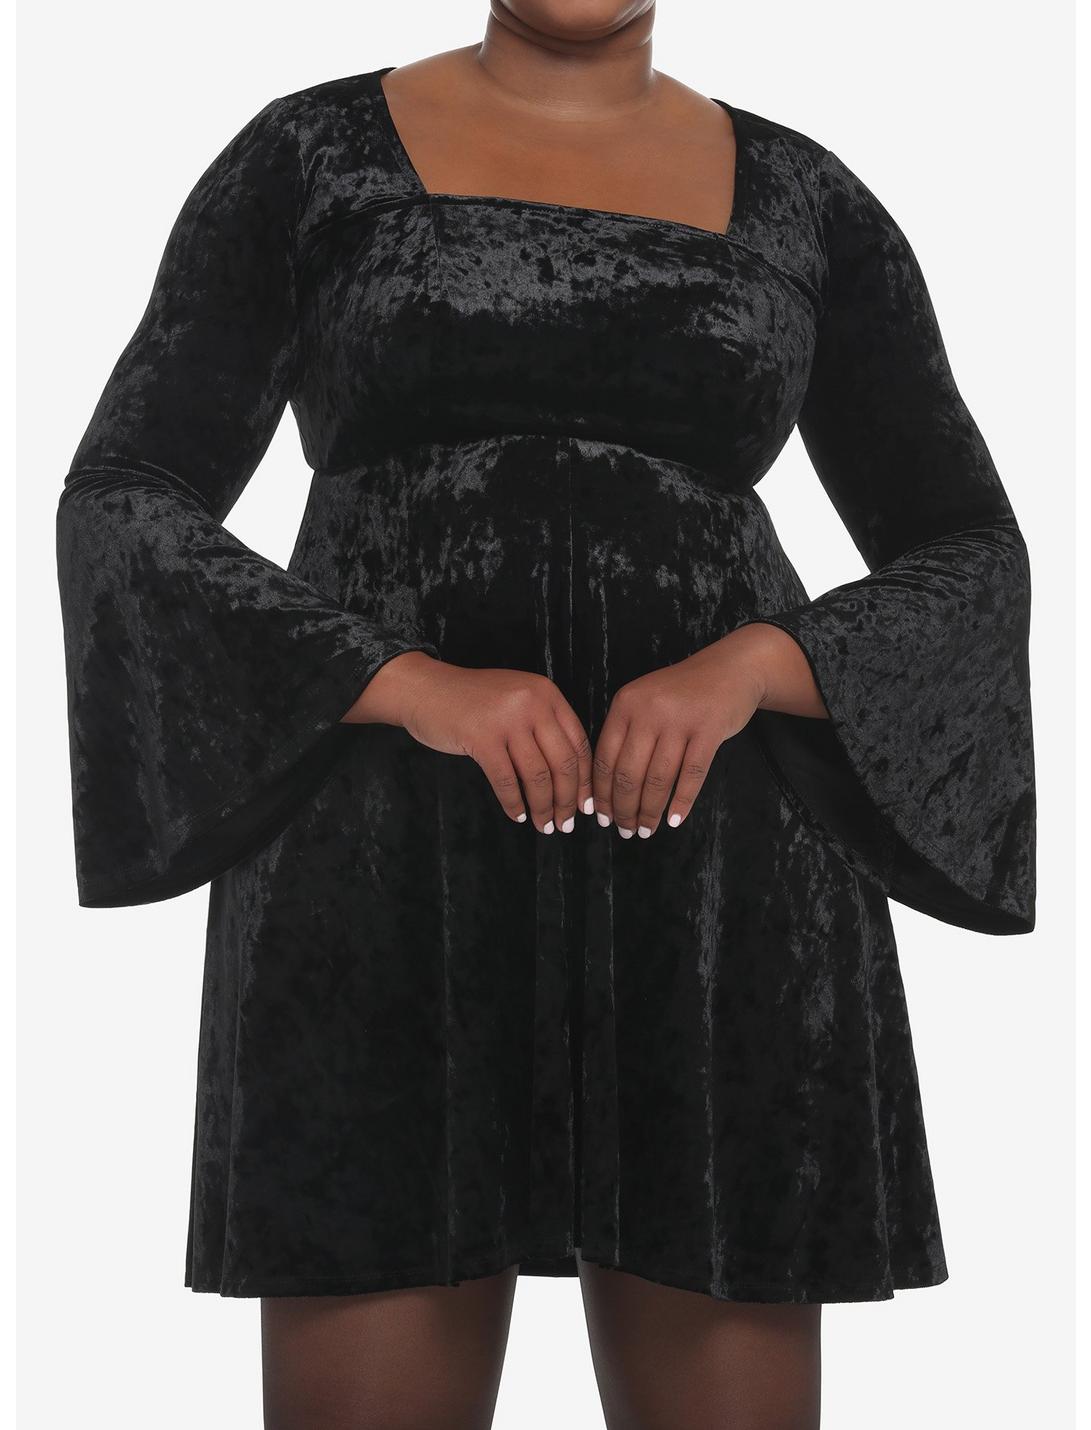 Black Crushed Velvet Bell-Sleeve Mini Dress Plus Size, BLACK, hi-res